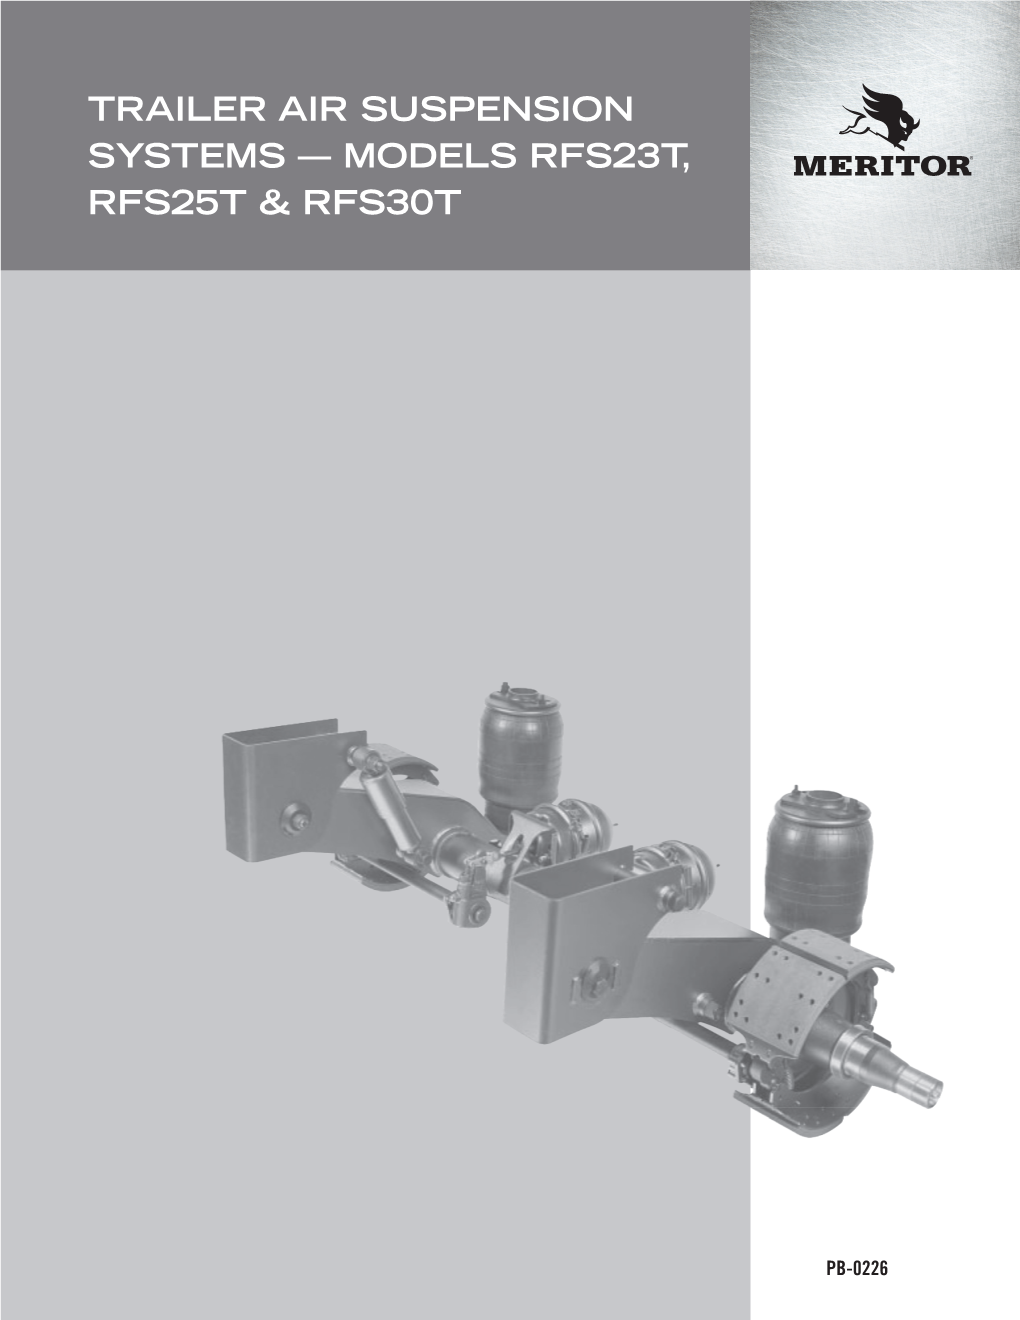 Trailer Air Suspension Systems — Models Rfs23t, Rfs25t & Rfs30t